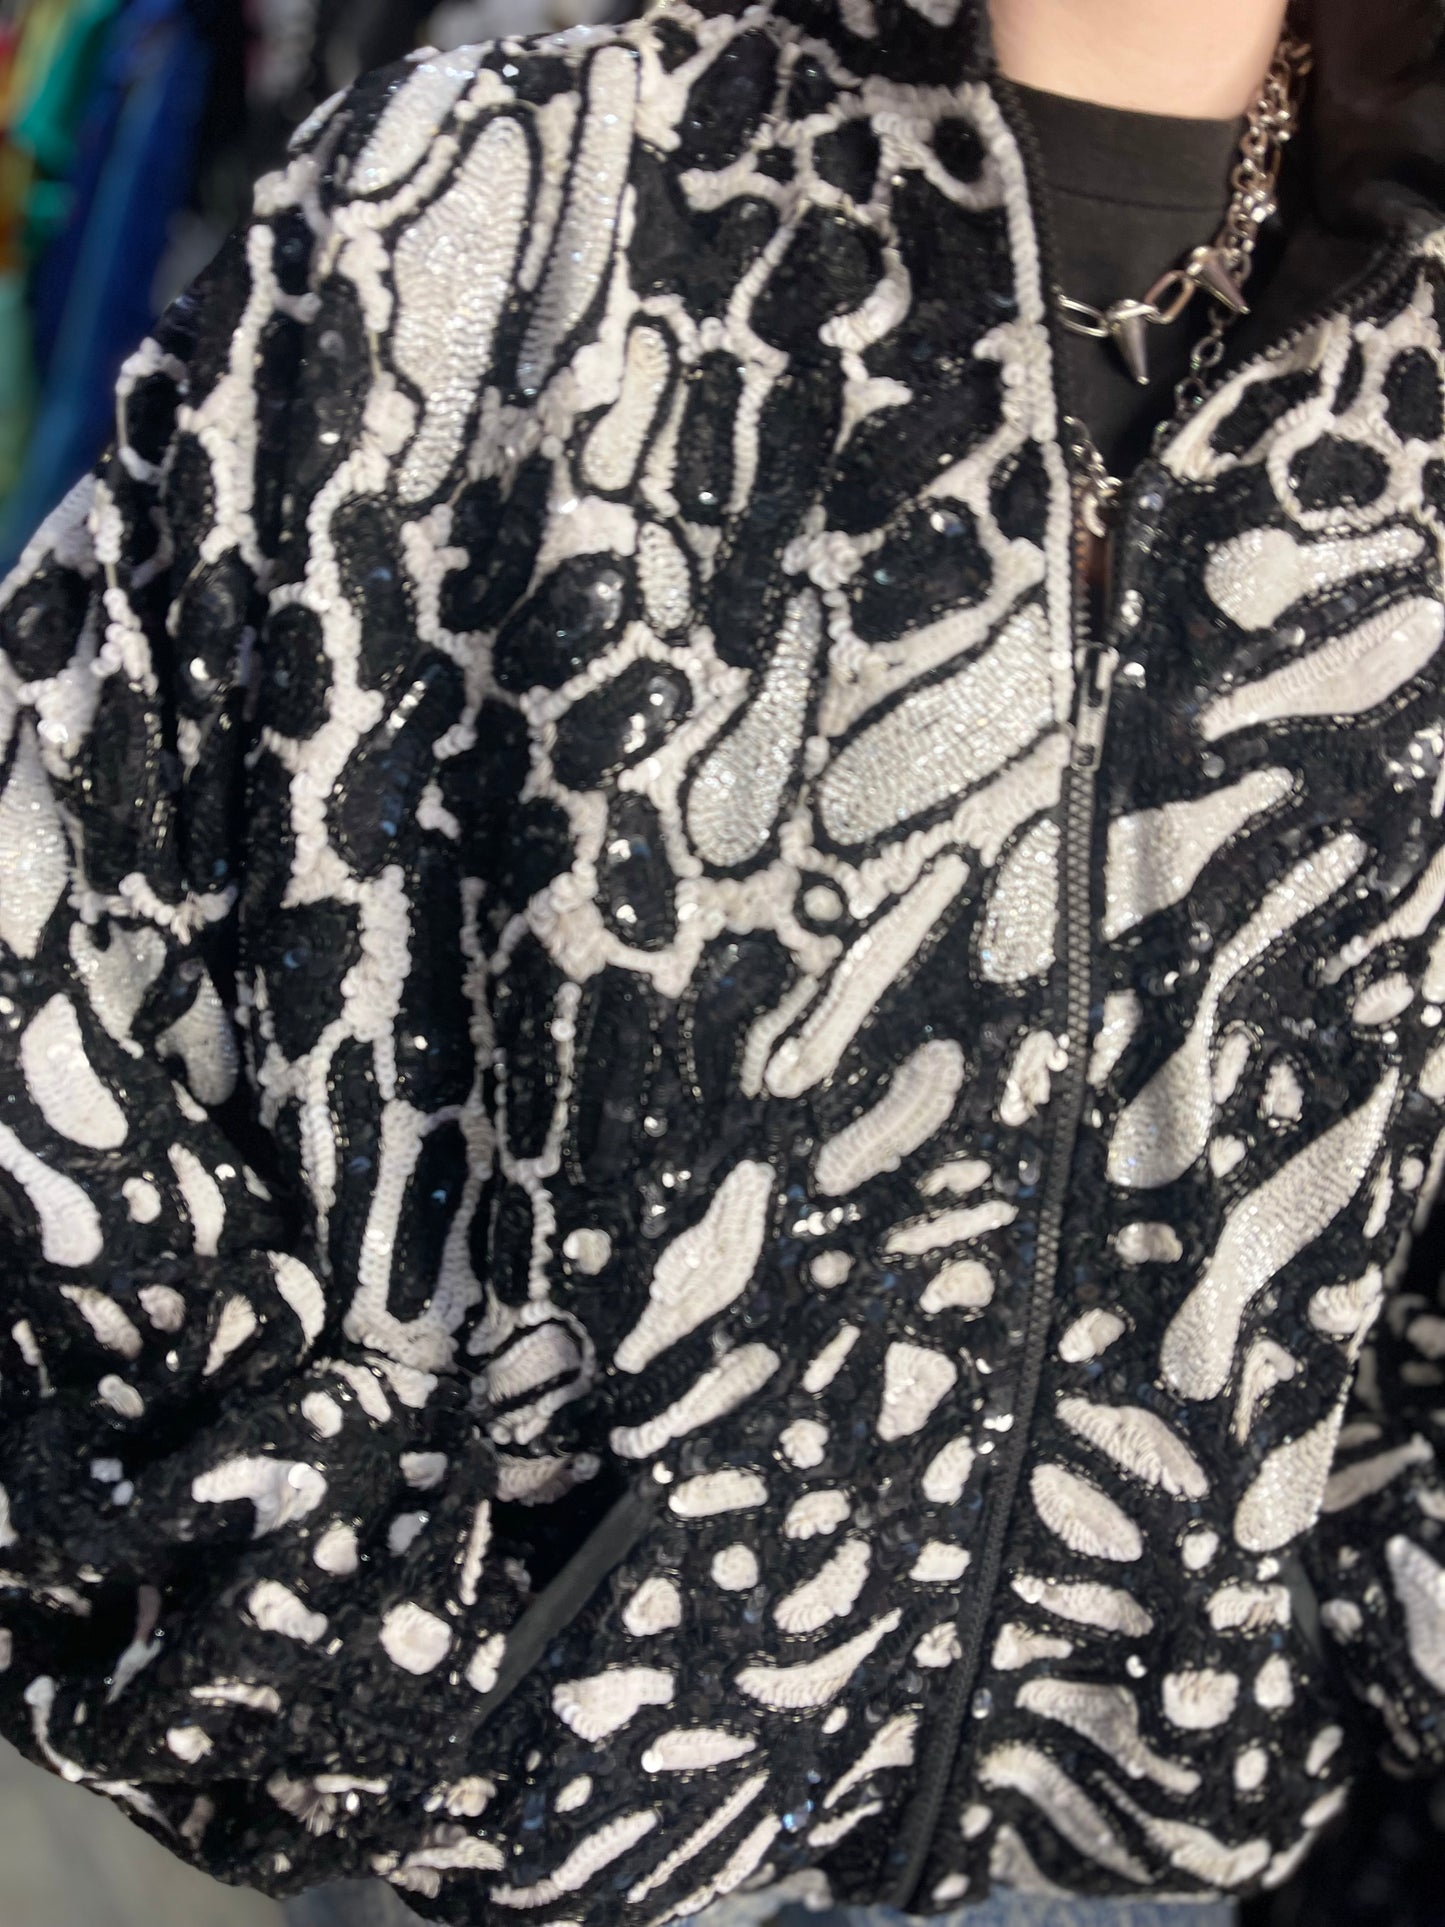 Vintage 90s Black and White Leopard Sequin Jacket